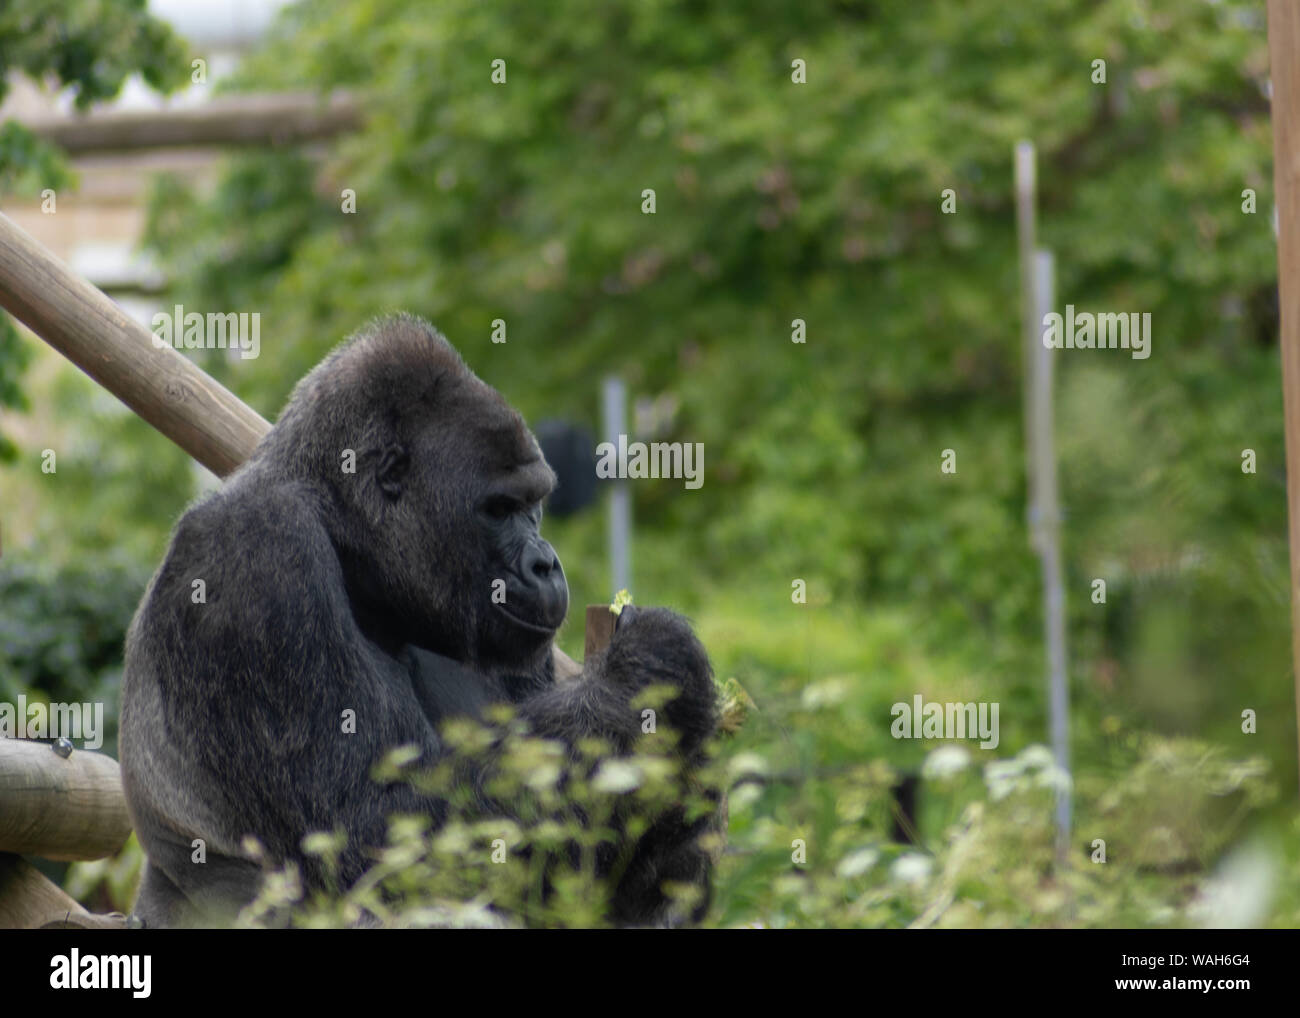 western lowland silver back gorilla enjoying a while eating Cauliflower Photo - Alamy